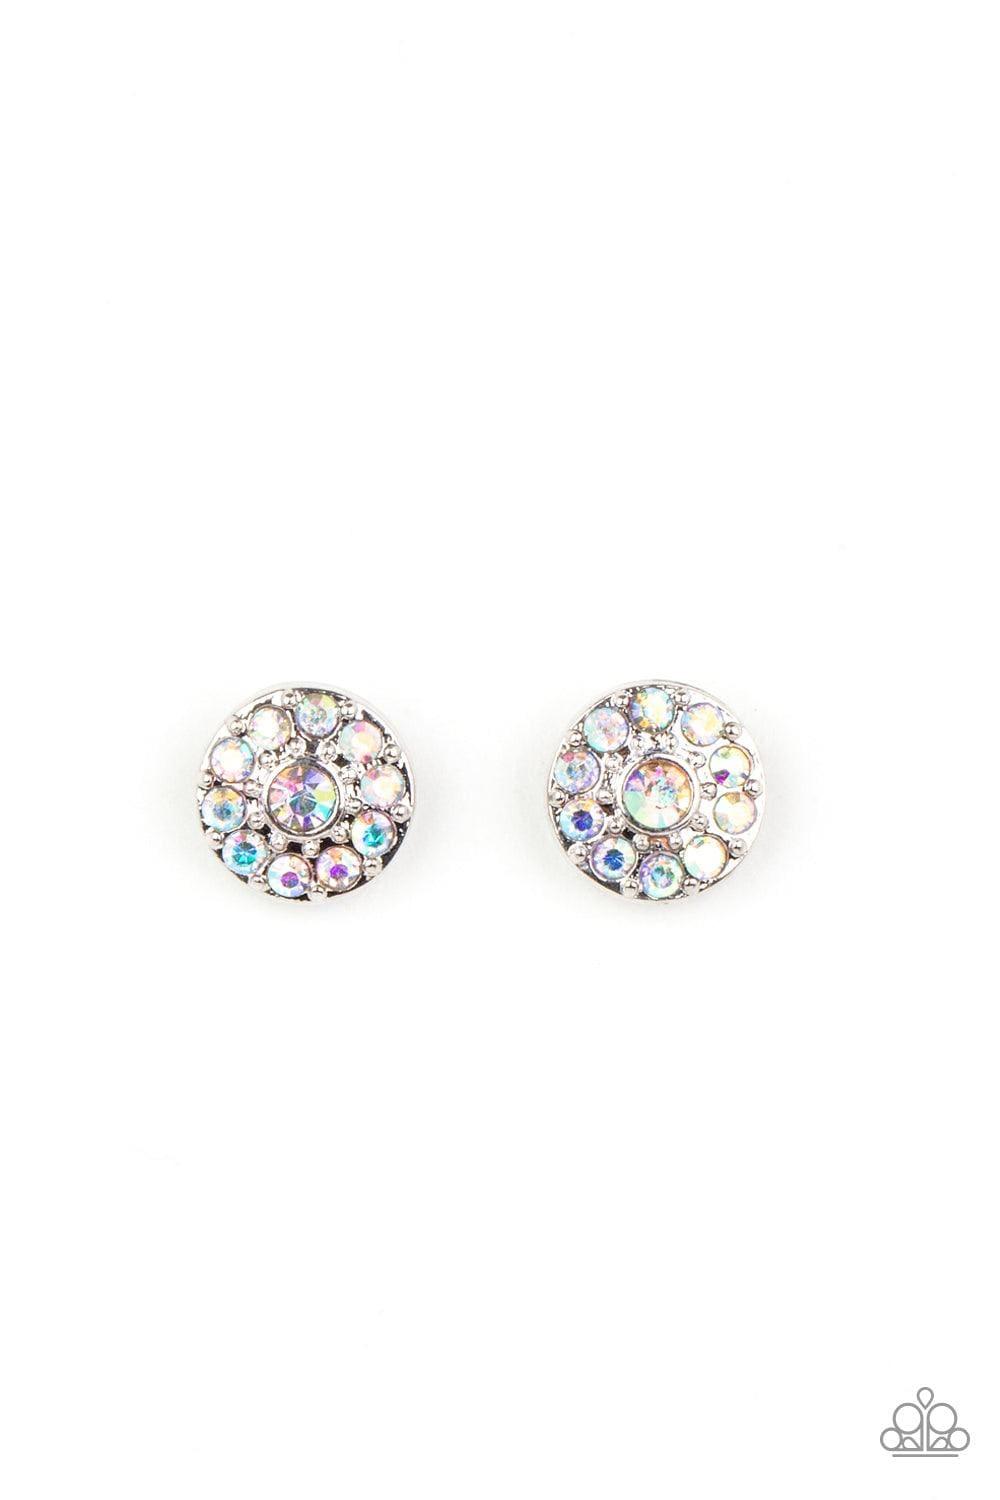 Paparazzi Accessories - Paparazzi Starlet Shimmer Jewelry - Dainty Earrings - Bling by JessieK